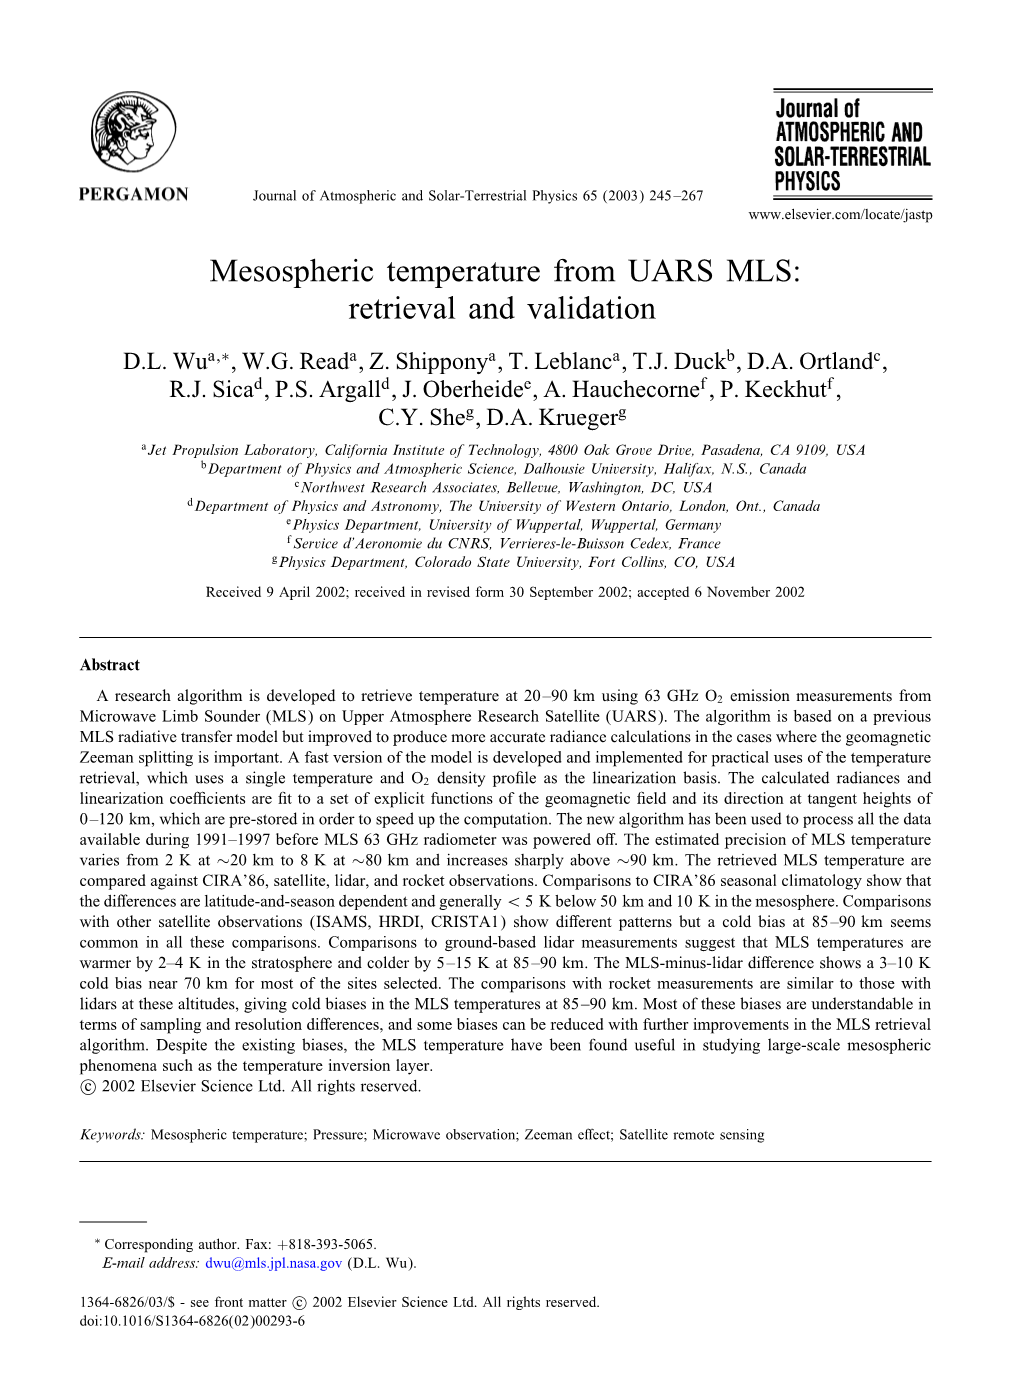 Mesospheric Temperature from UARS MLS: Retrieval and Validation